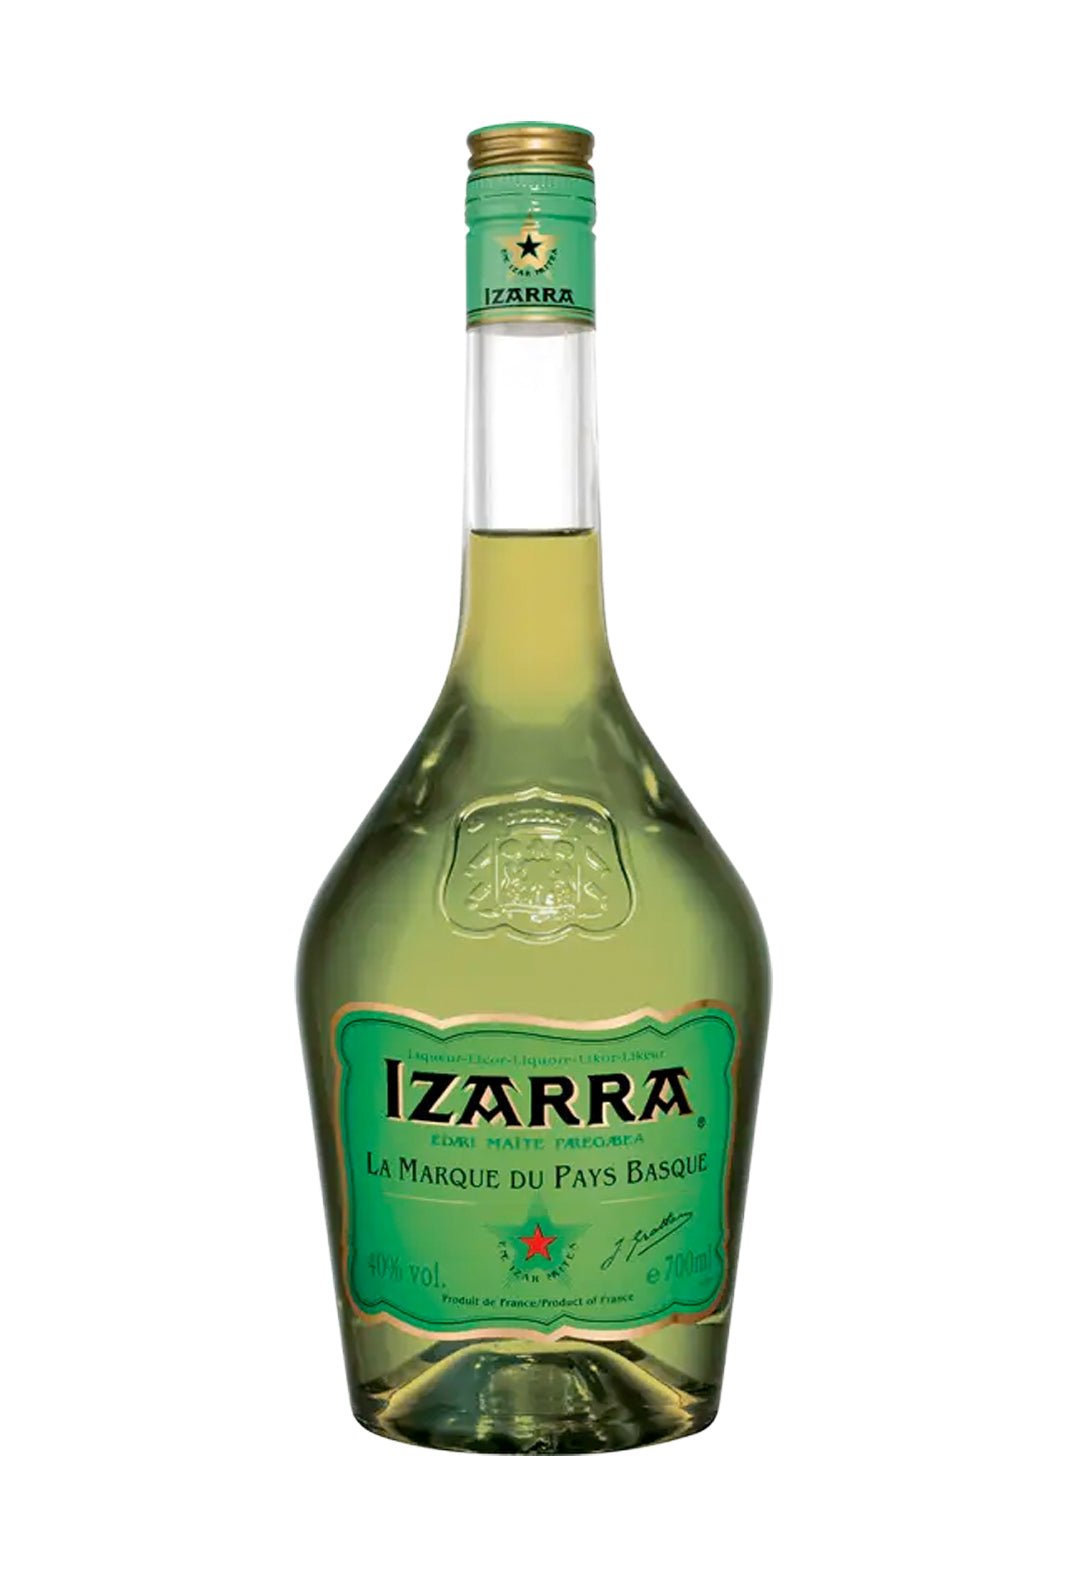 Vedrenne Izarra Green Liqueur 40% 700m | Liqueurs | Shop online at Spirits of France